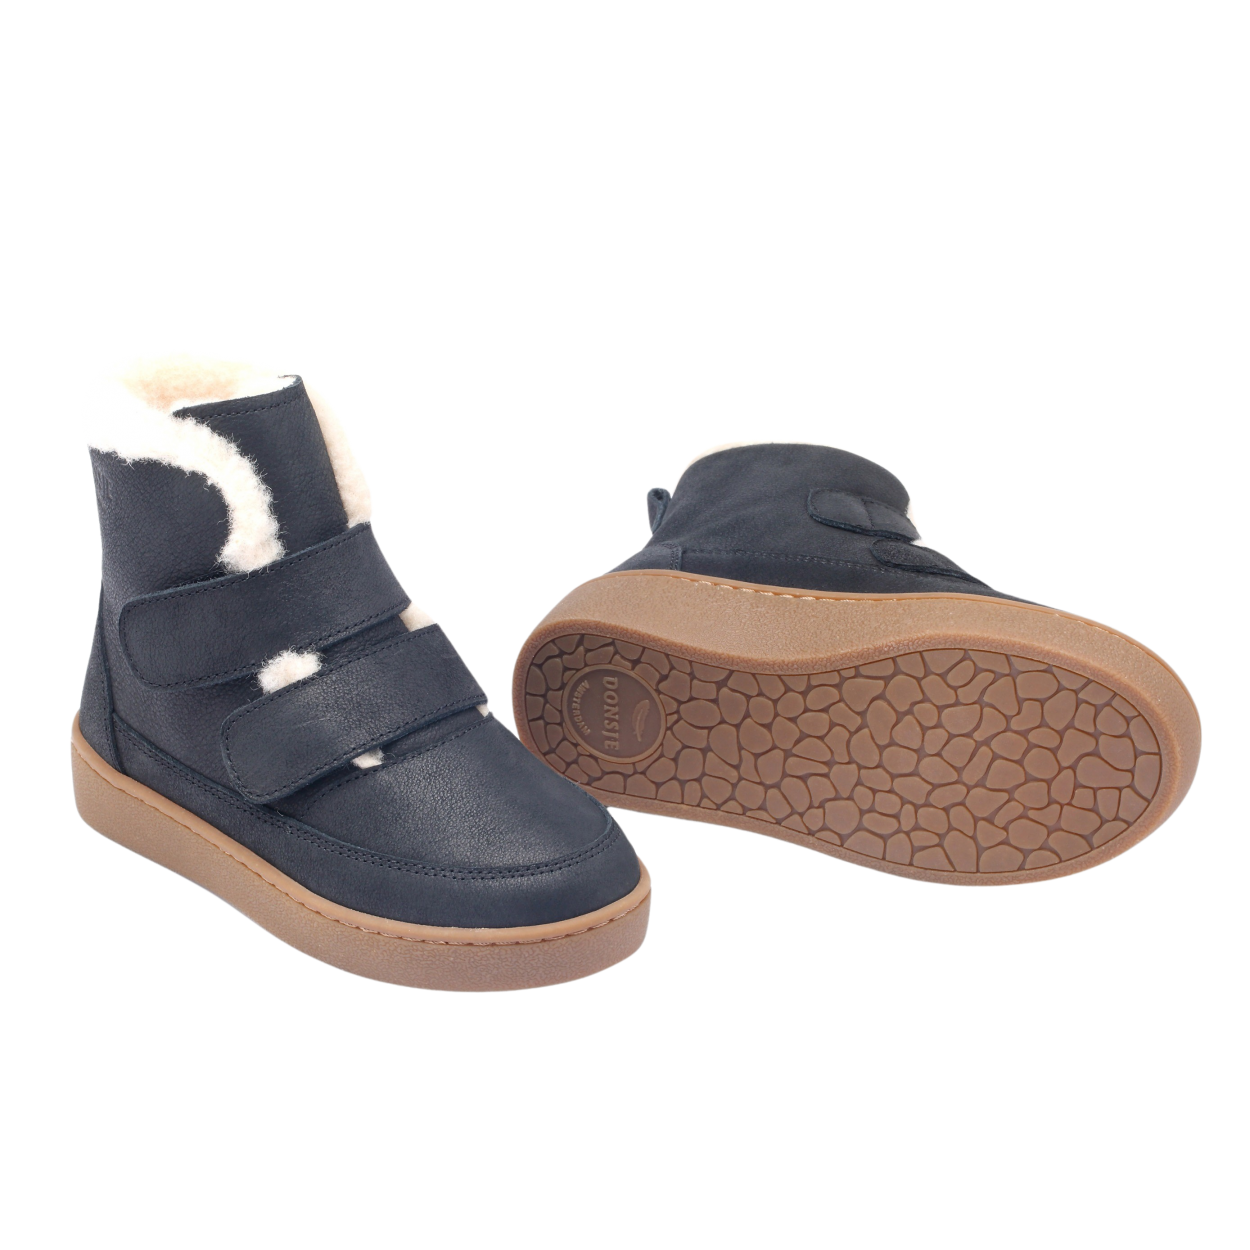 Clenn Boots | Black Leather